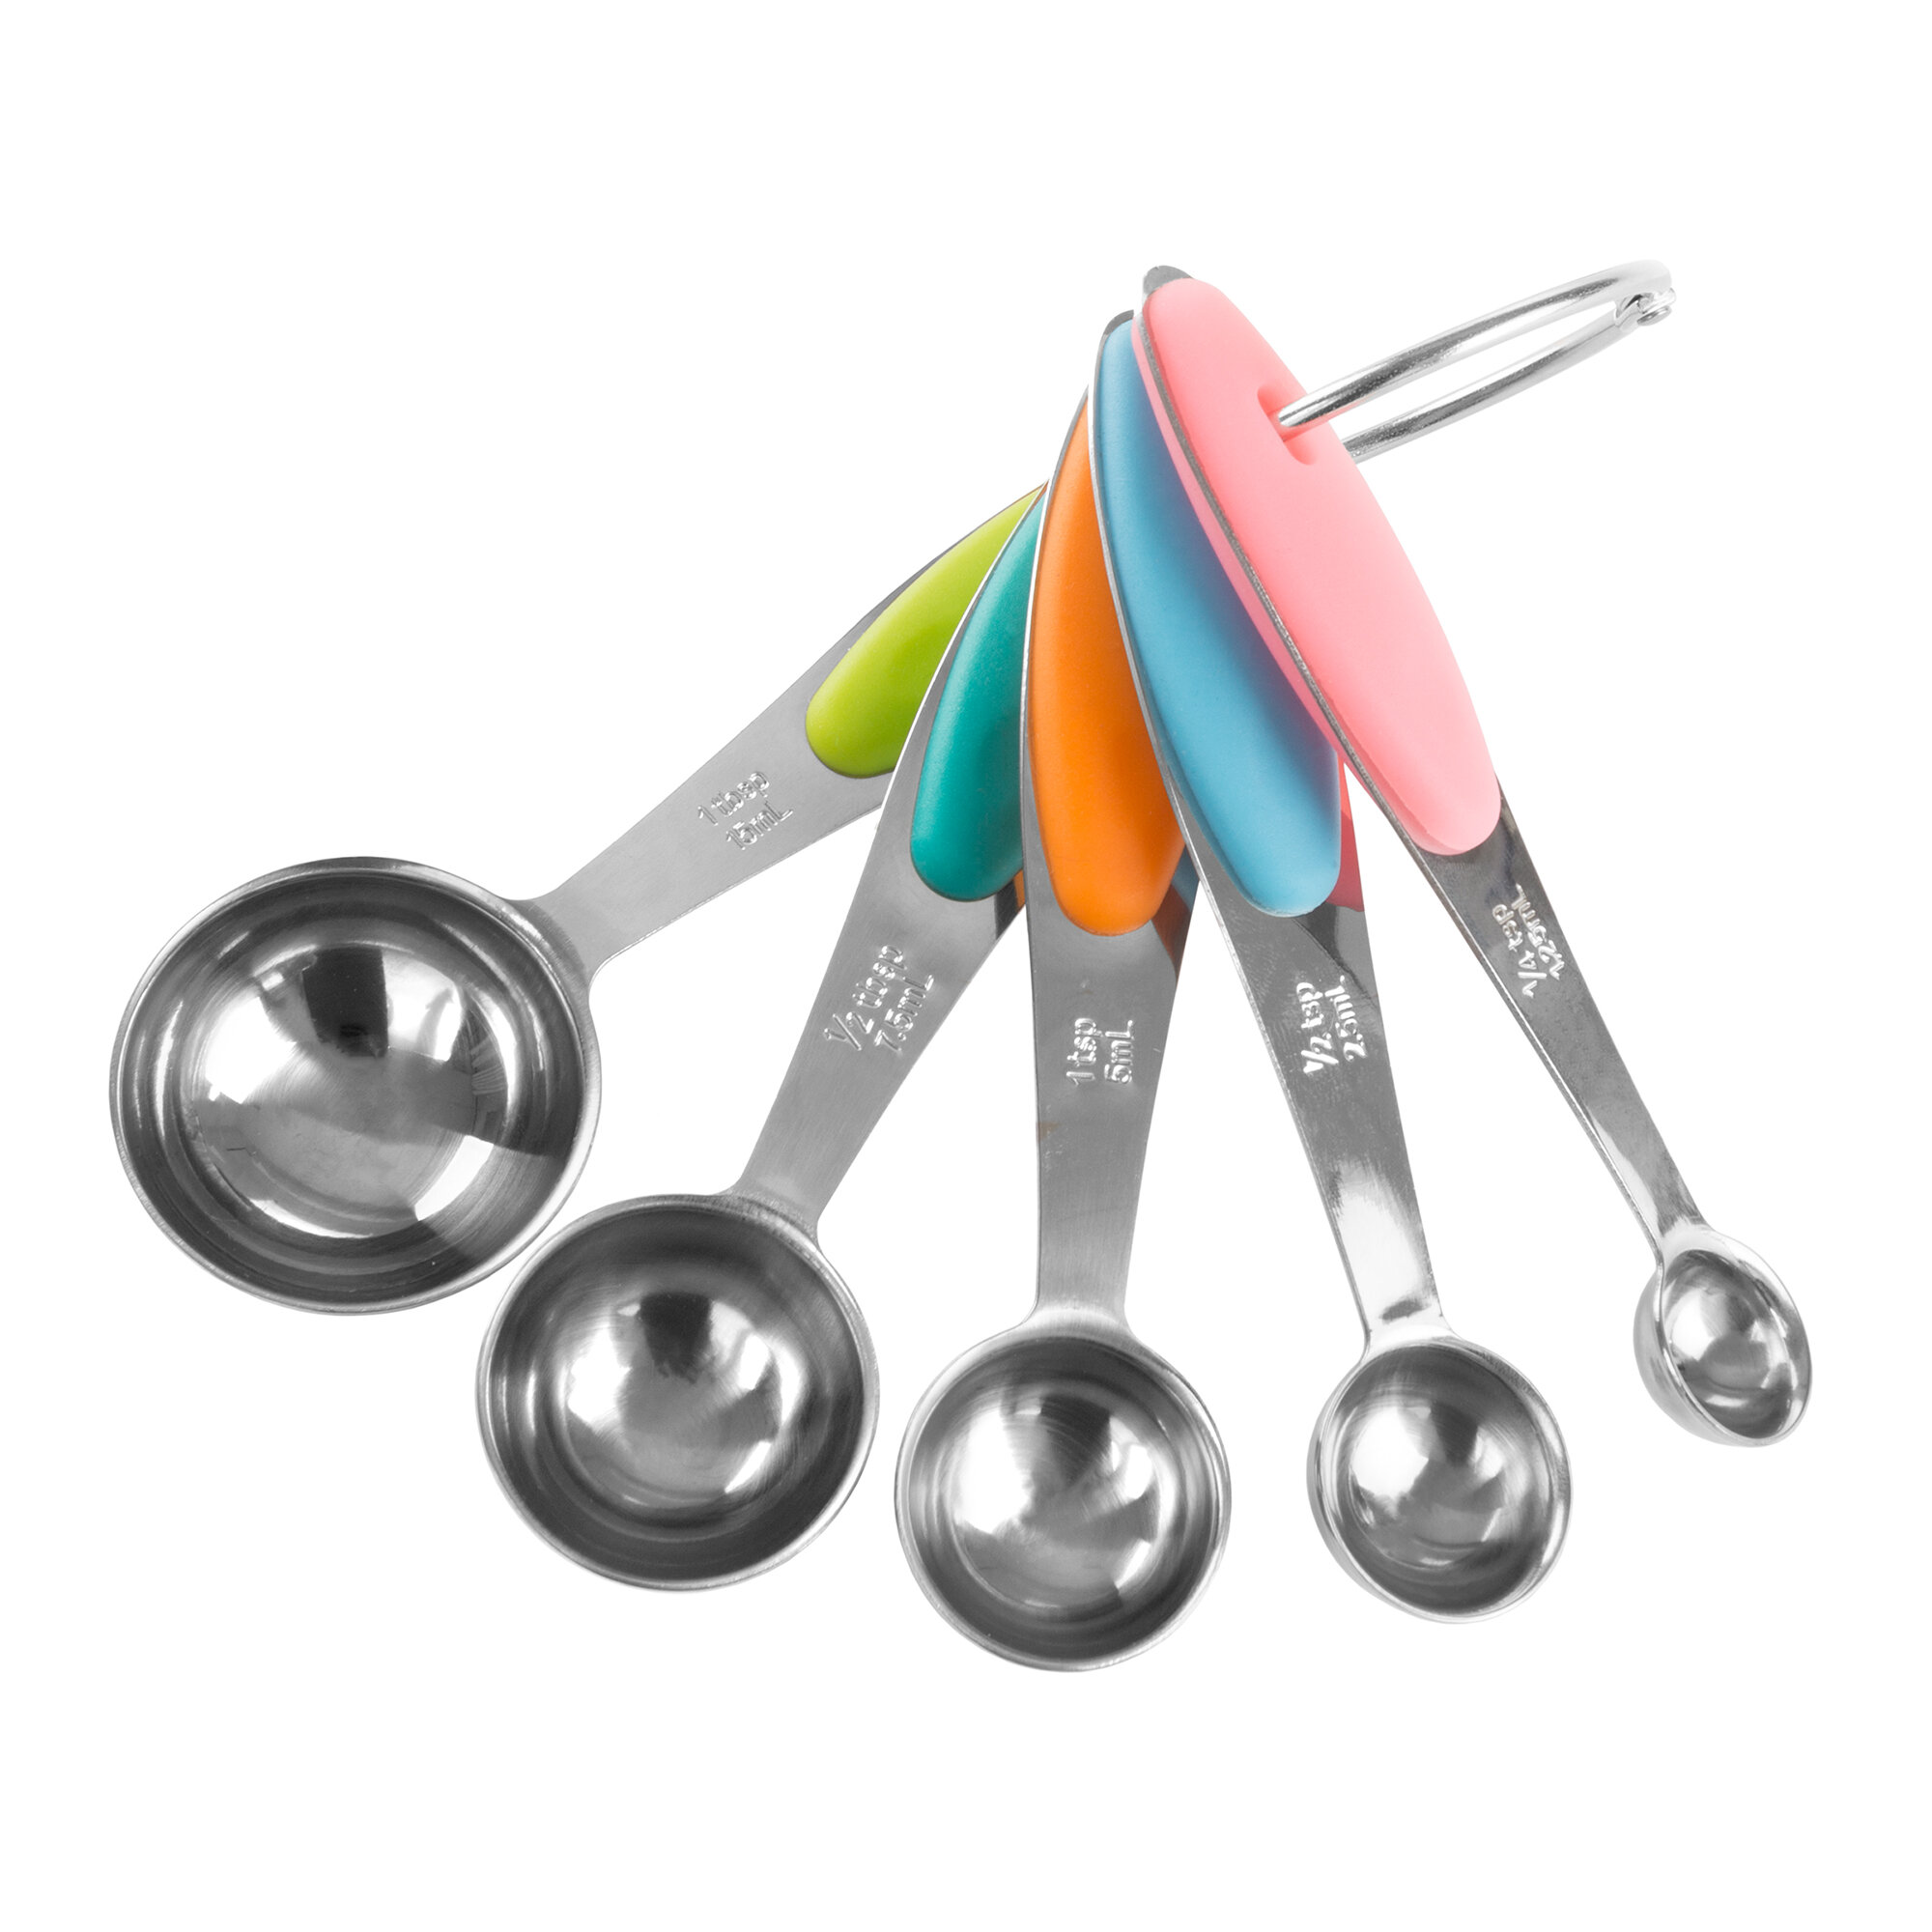 Kitchenaid 5 Measuring Spoons With Silicone Grips Multicolor, Aqua